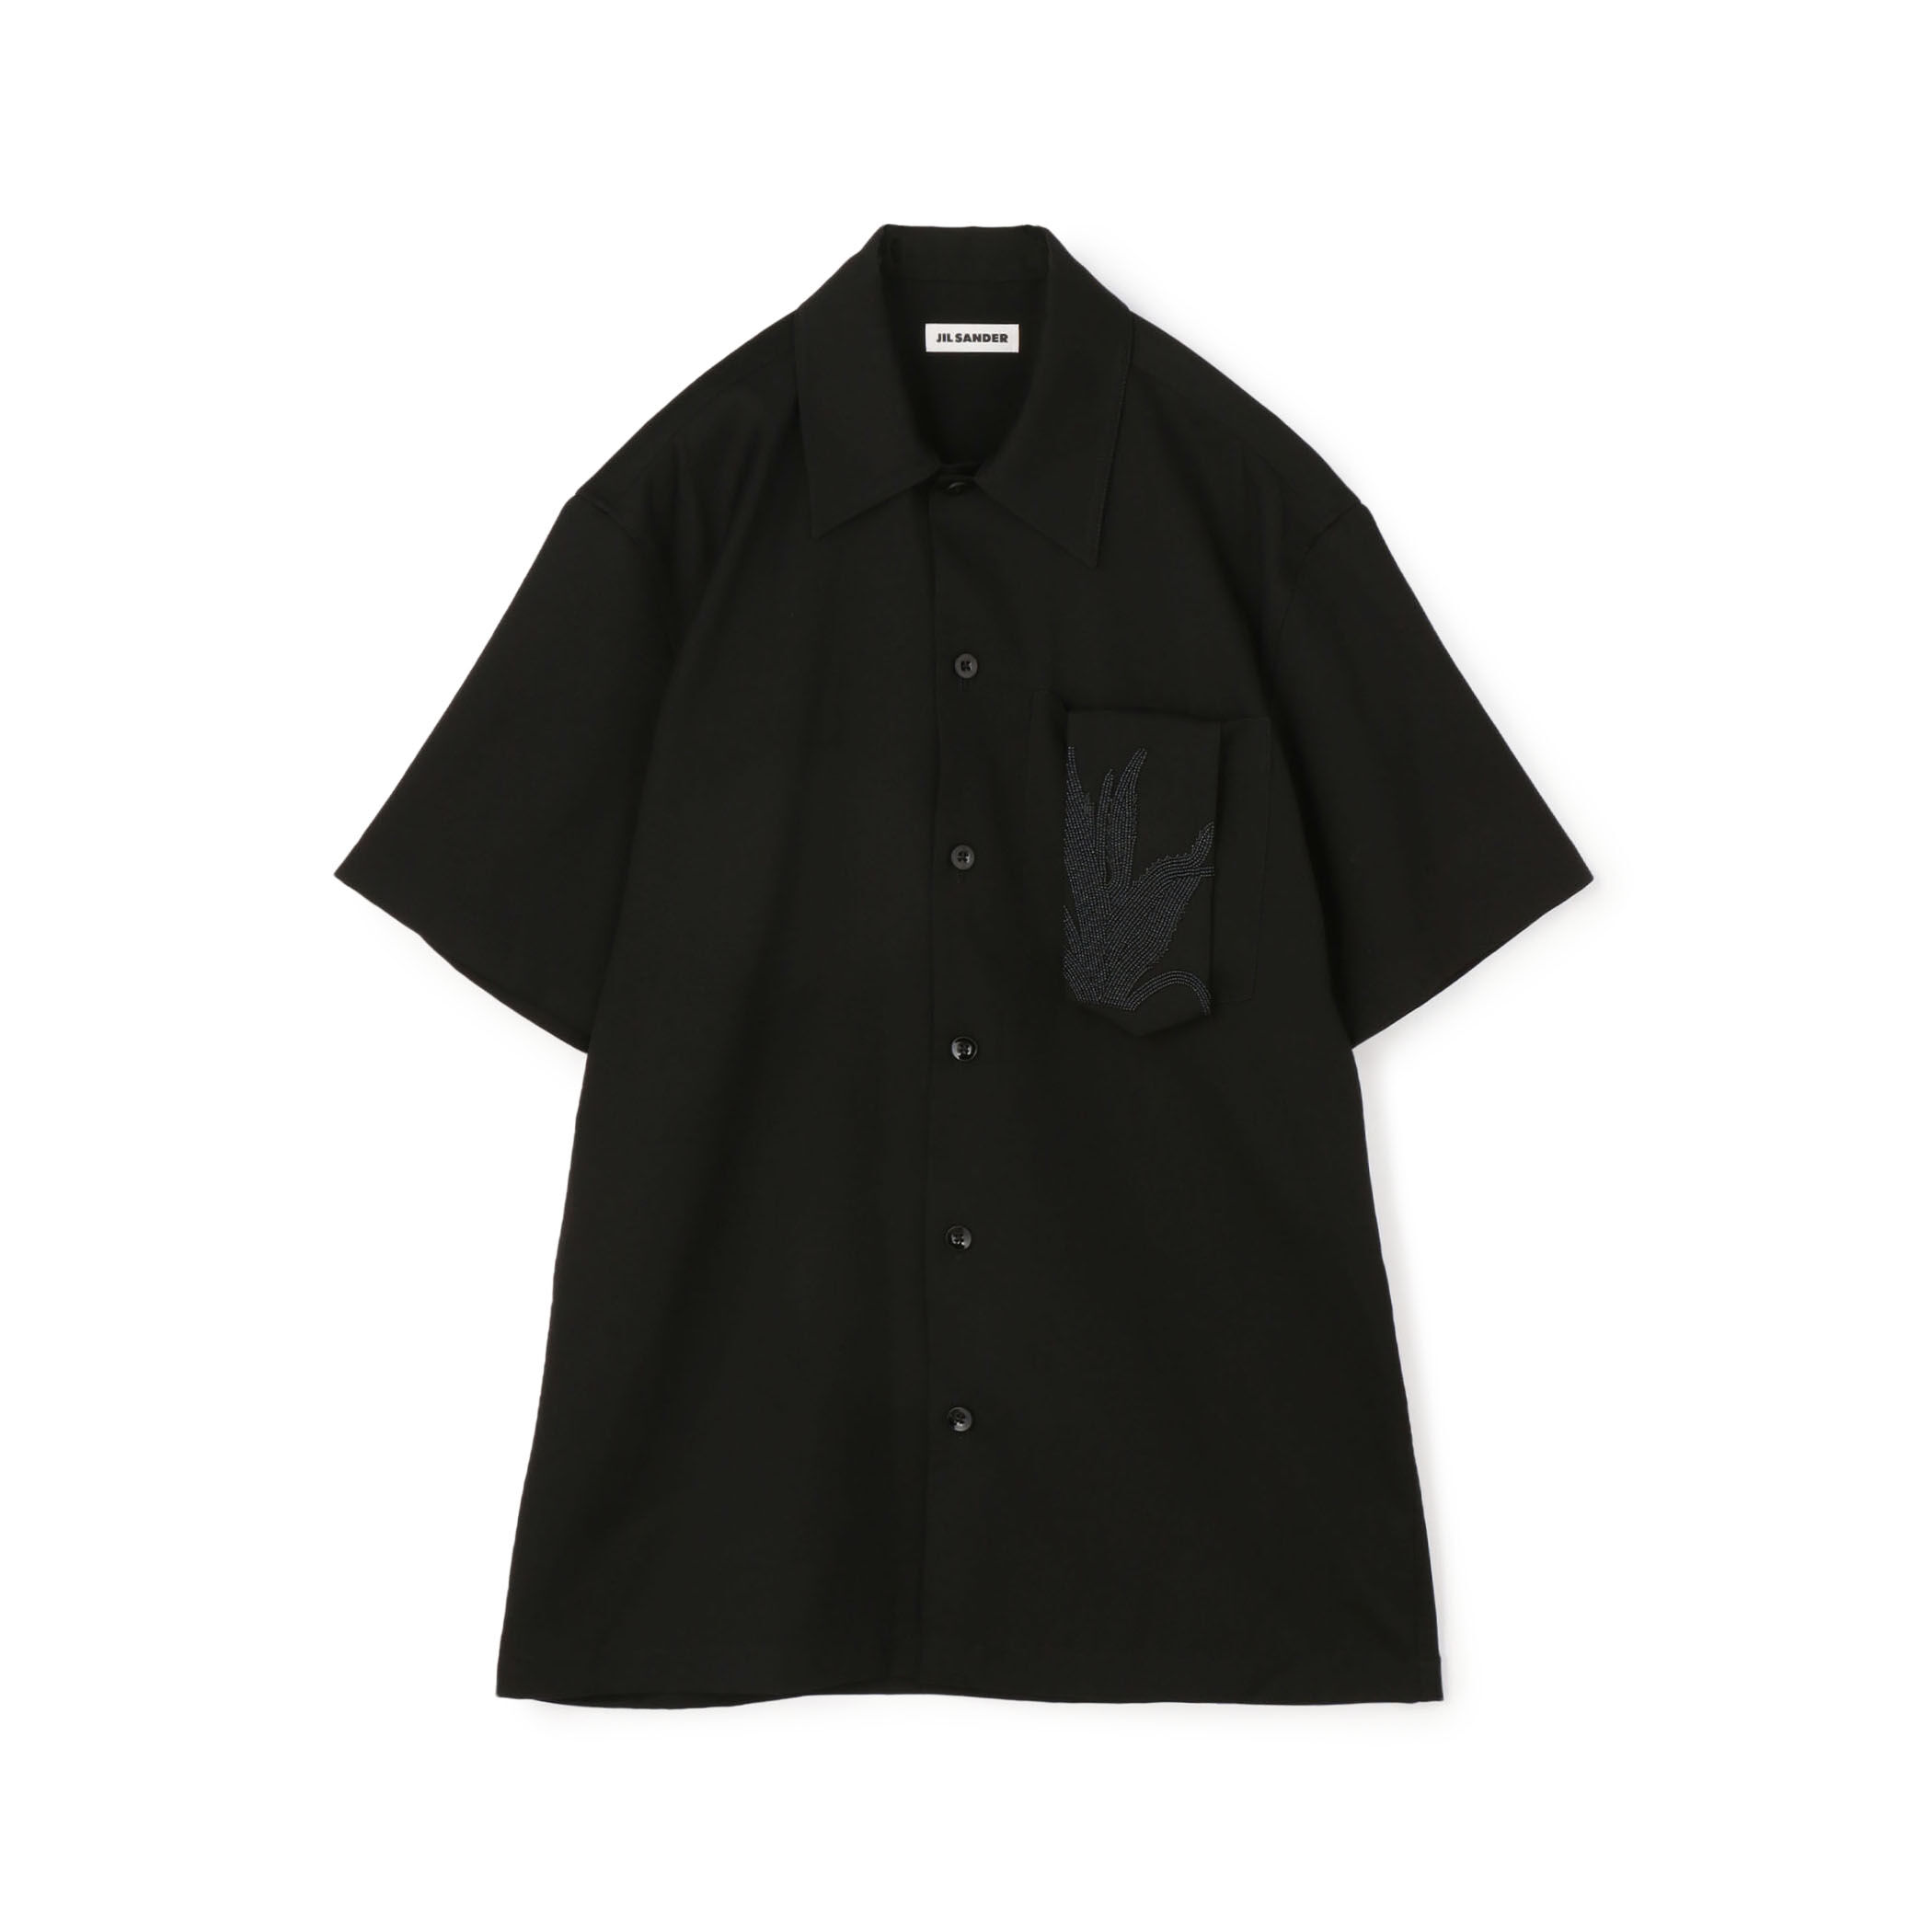 Tシャツ/カットソー(半袖/袖なし)新品 M JIL SANDER 22aw パックTシャツ 黒 バラ 4293